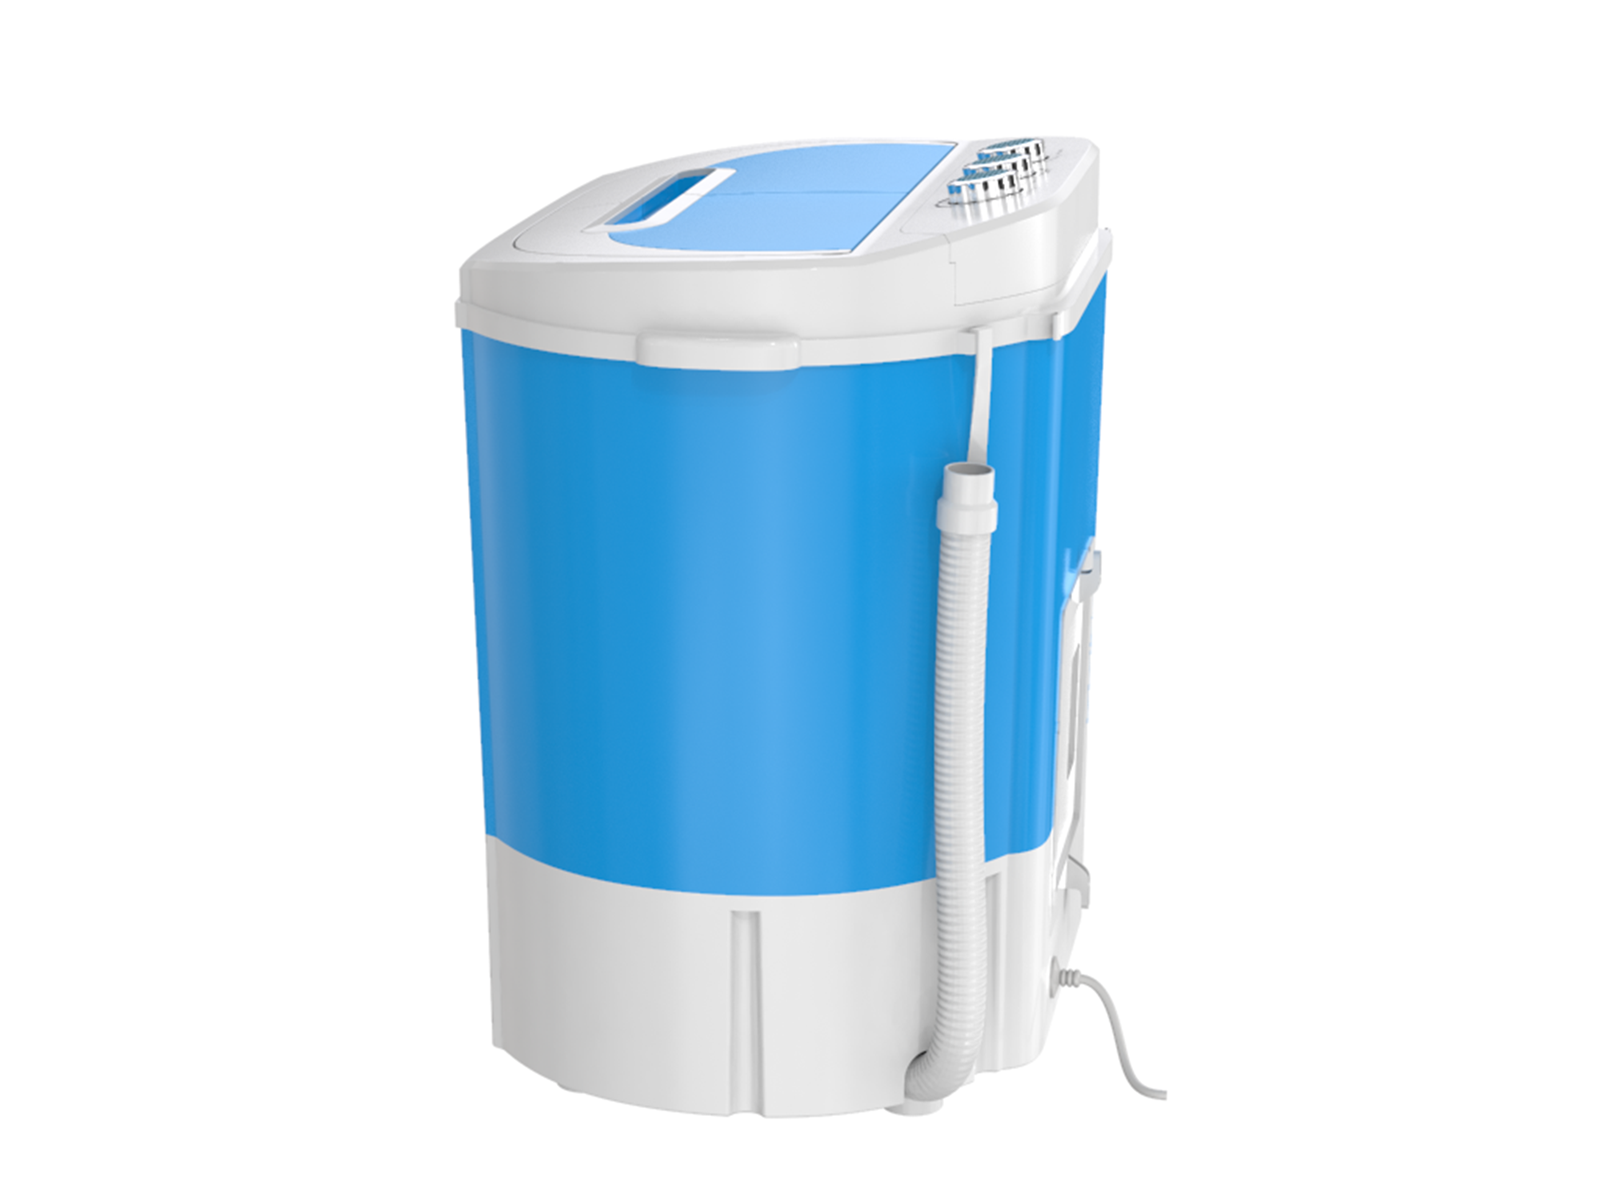 ZENSTYLE Portable Compact Wash machine 10lbs Washer (5.5 